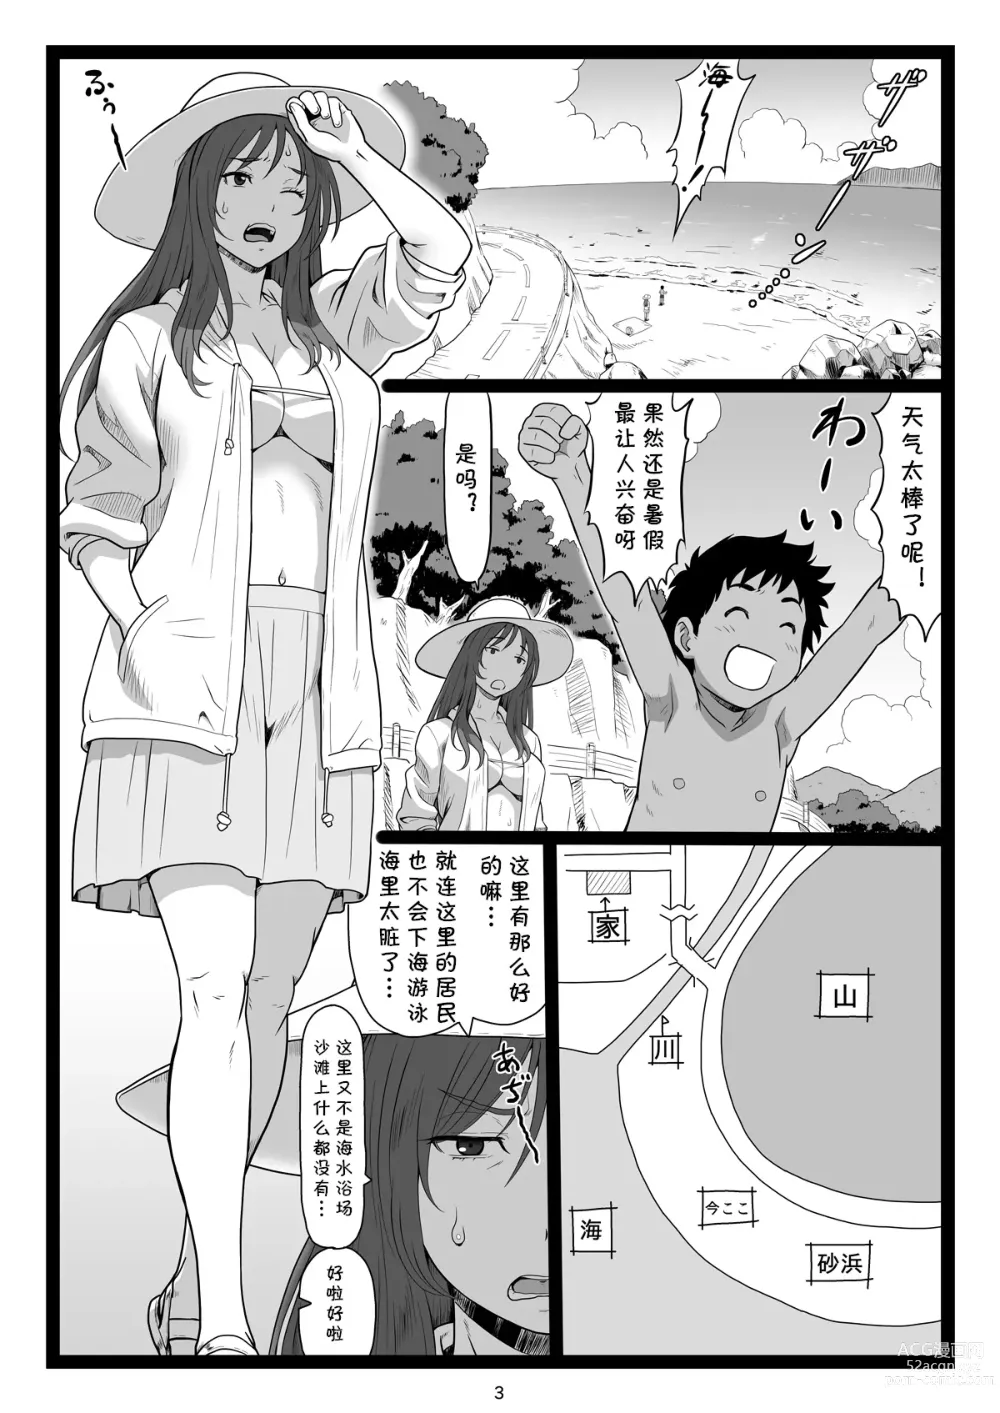 Page 3 of doujinshi Natsuyasumi no Omoide Gekan